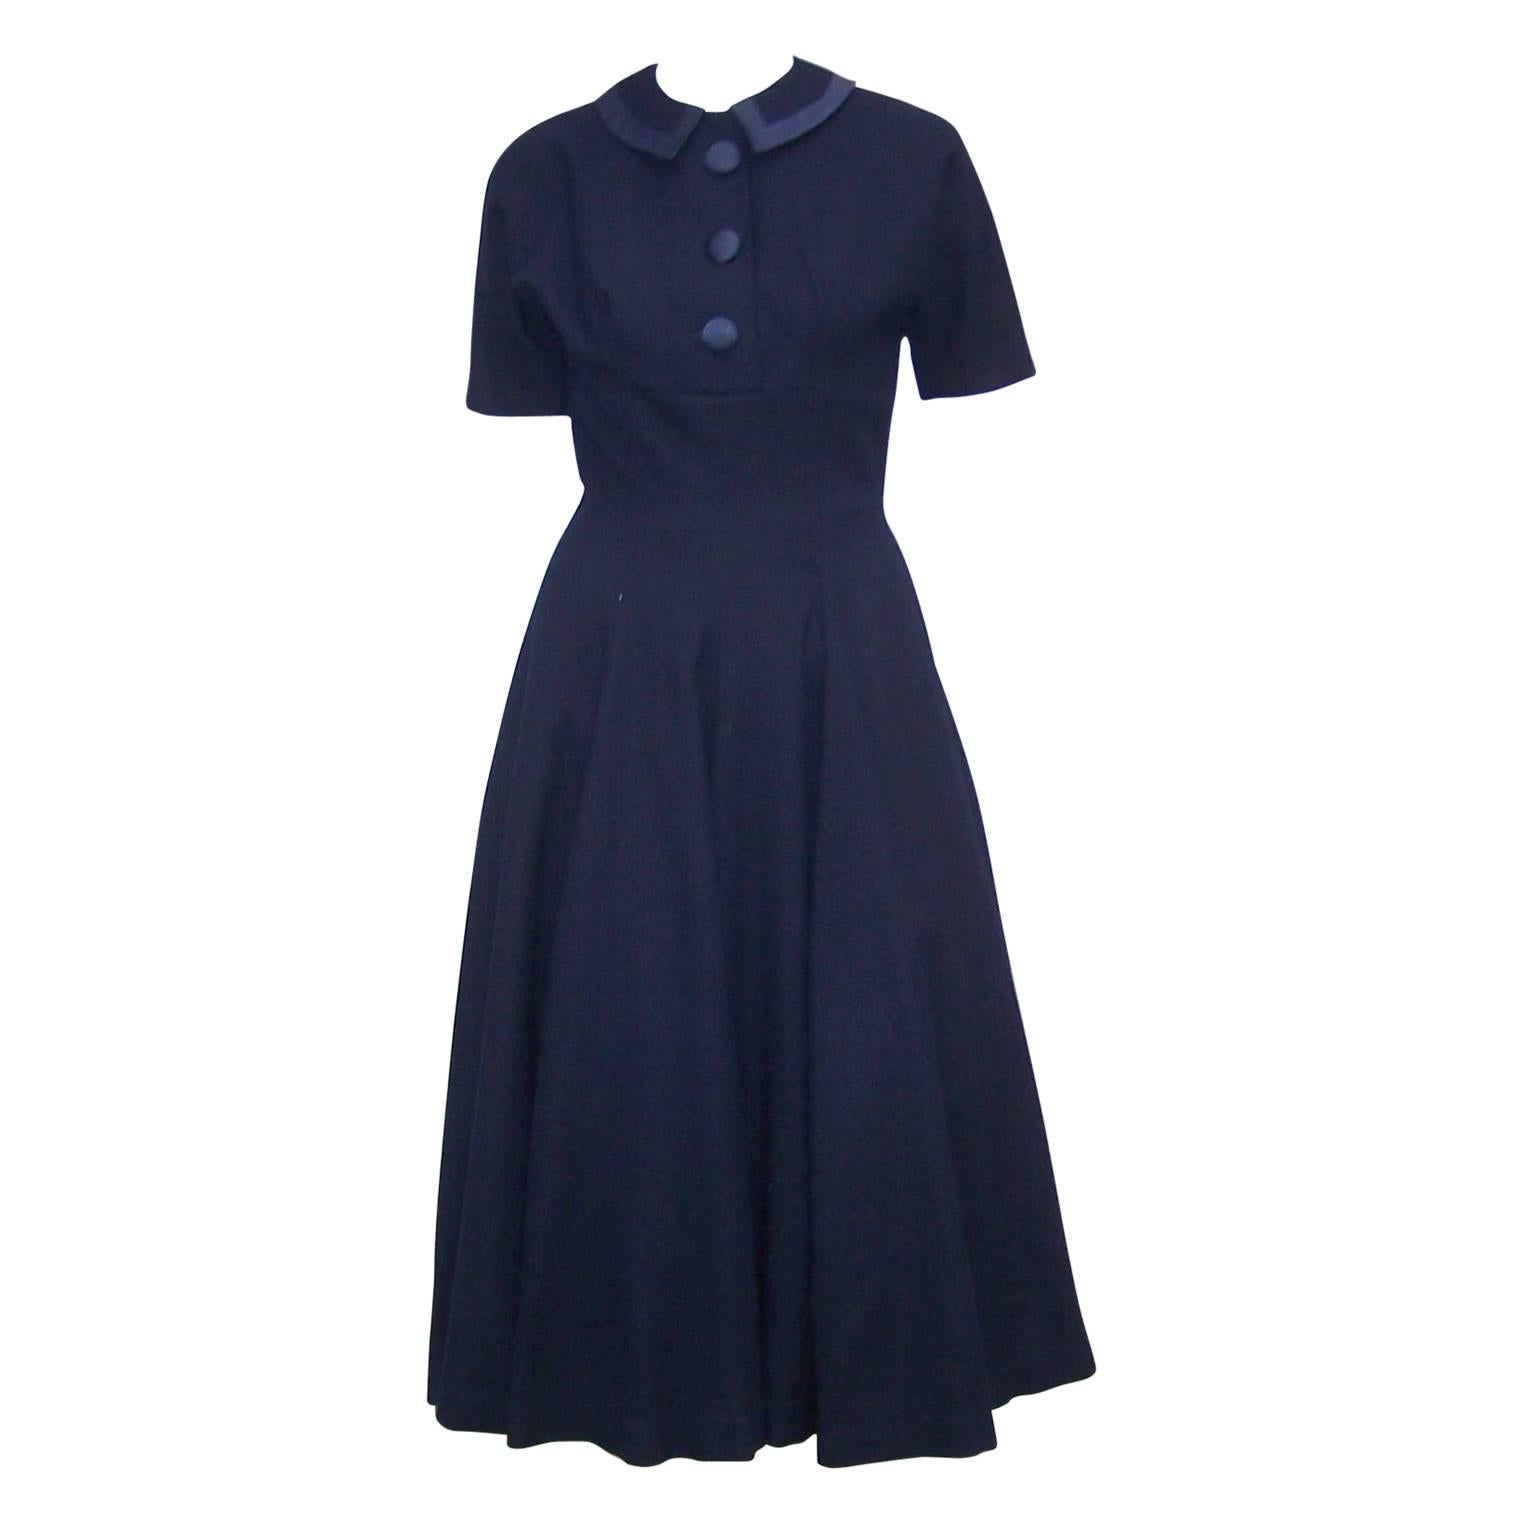 Classic 1950's Junior Circle Navy Blue Swing Skirted Dress